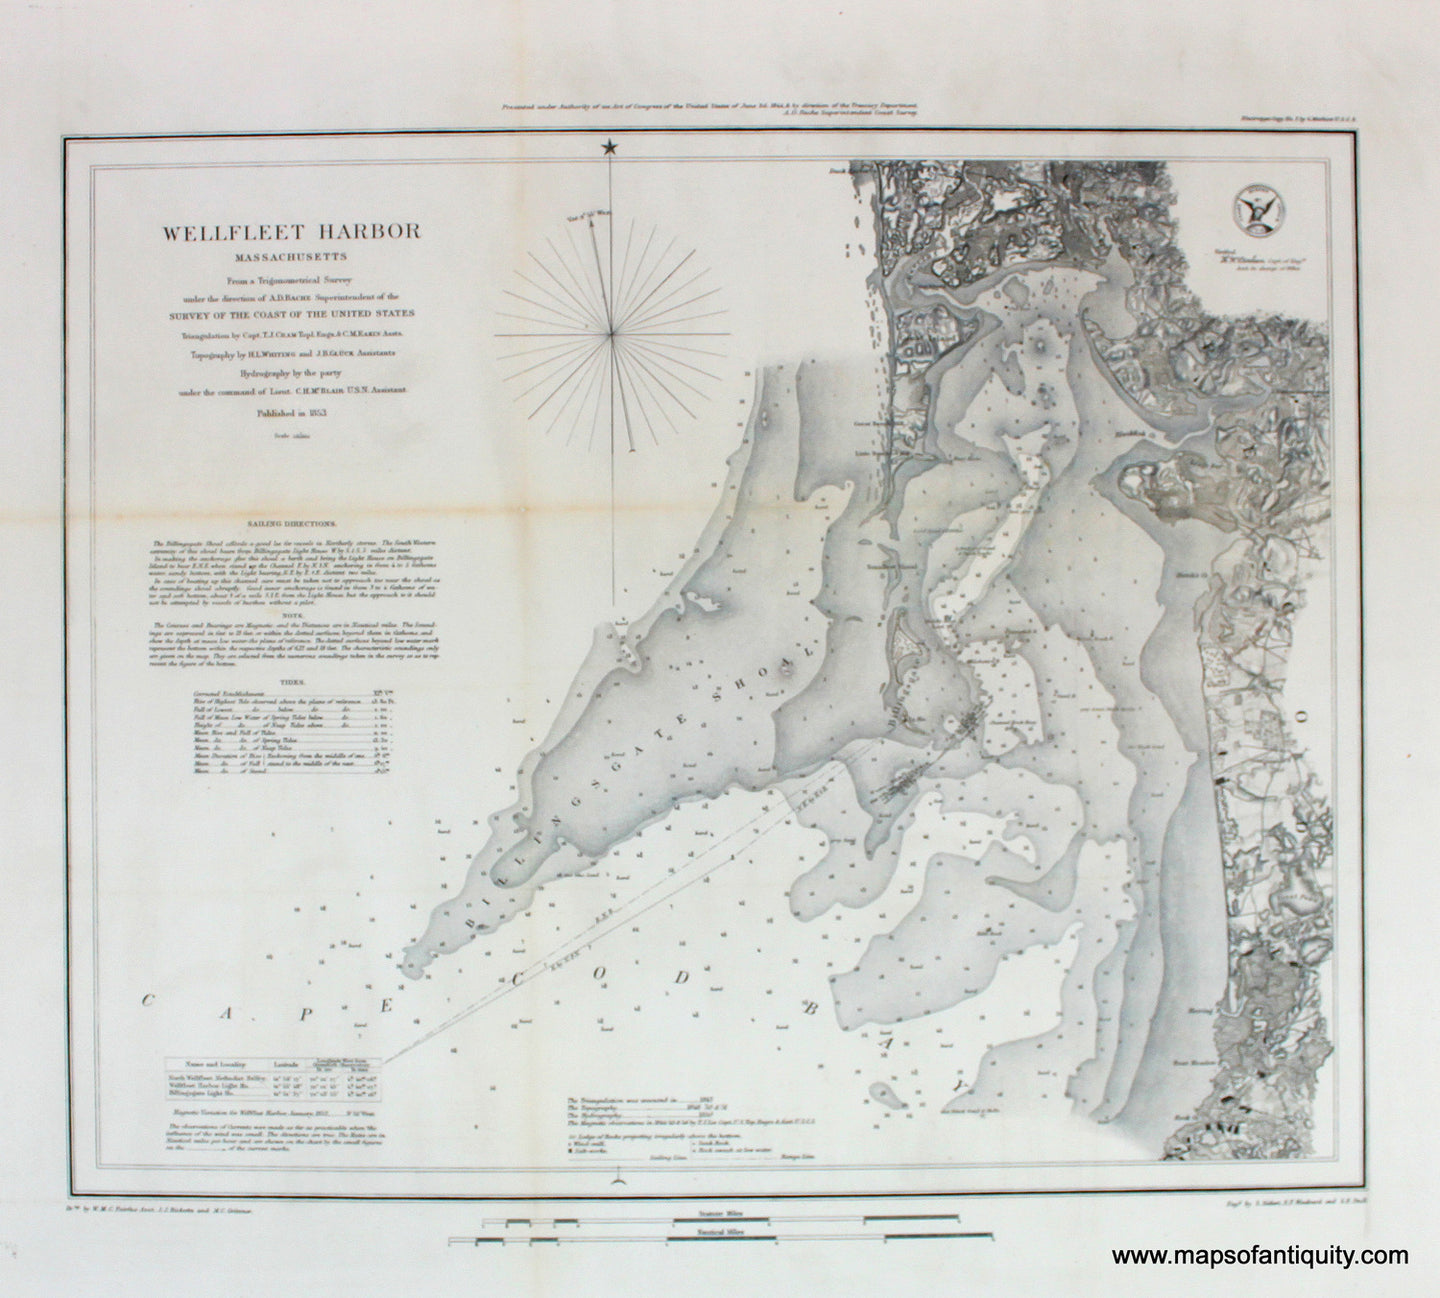 Reproduction-Wellfleet-Harbor-Massachusetts---Reproduction---Reproduction-Cape-Cod-and-Islands---U.S.-Coast-Survey-Maps-Of-Antiquity